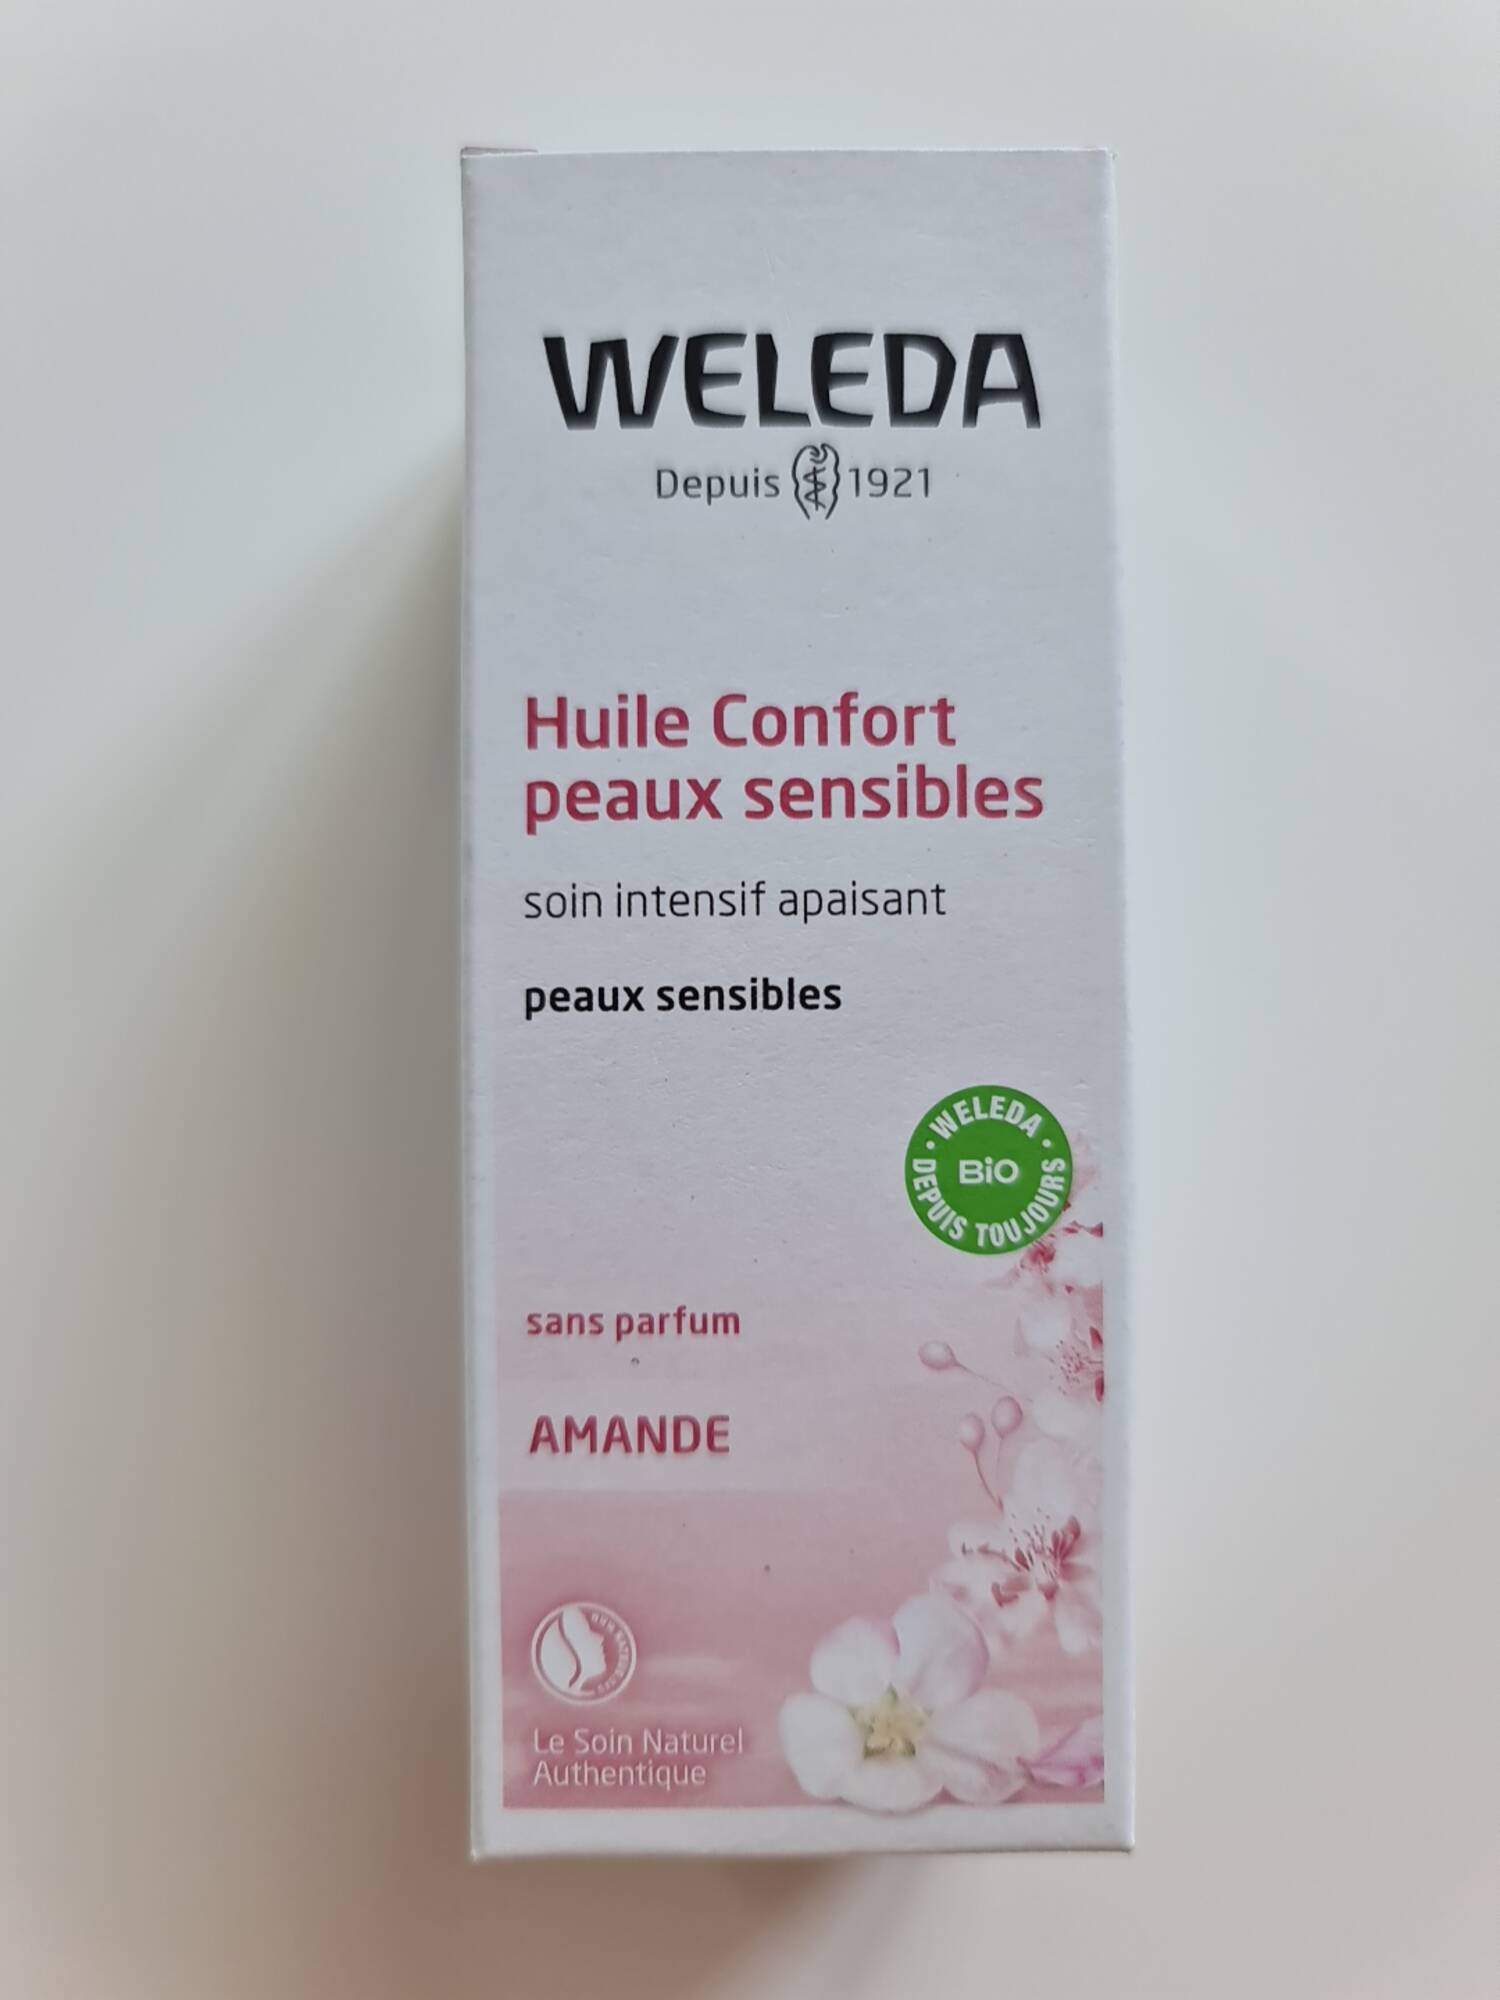 WELEDA - Amande - Huile confort peaux sensibles